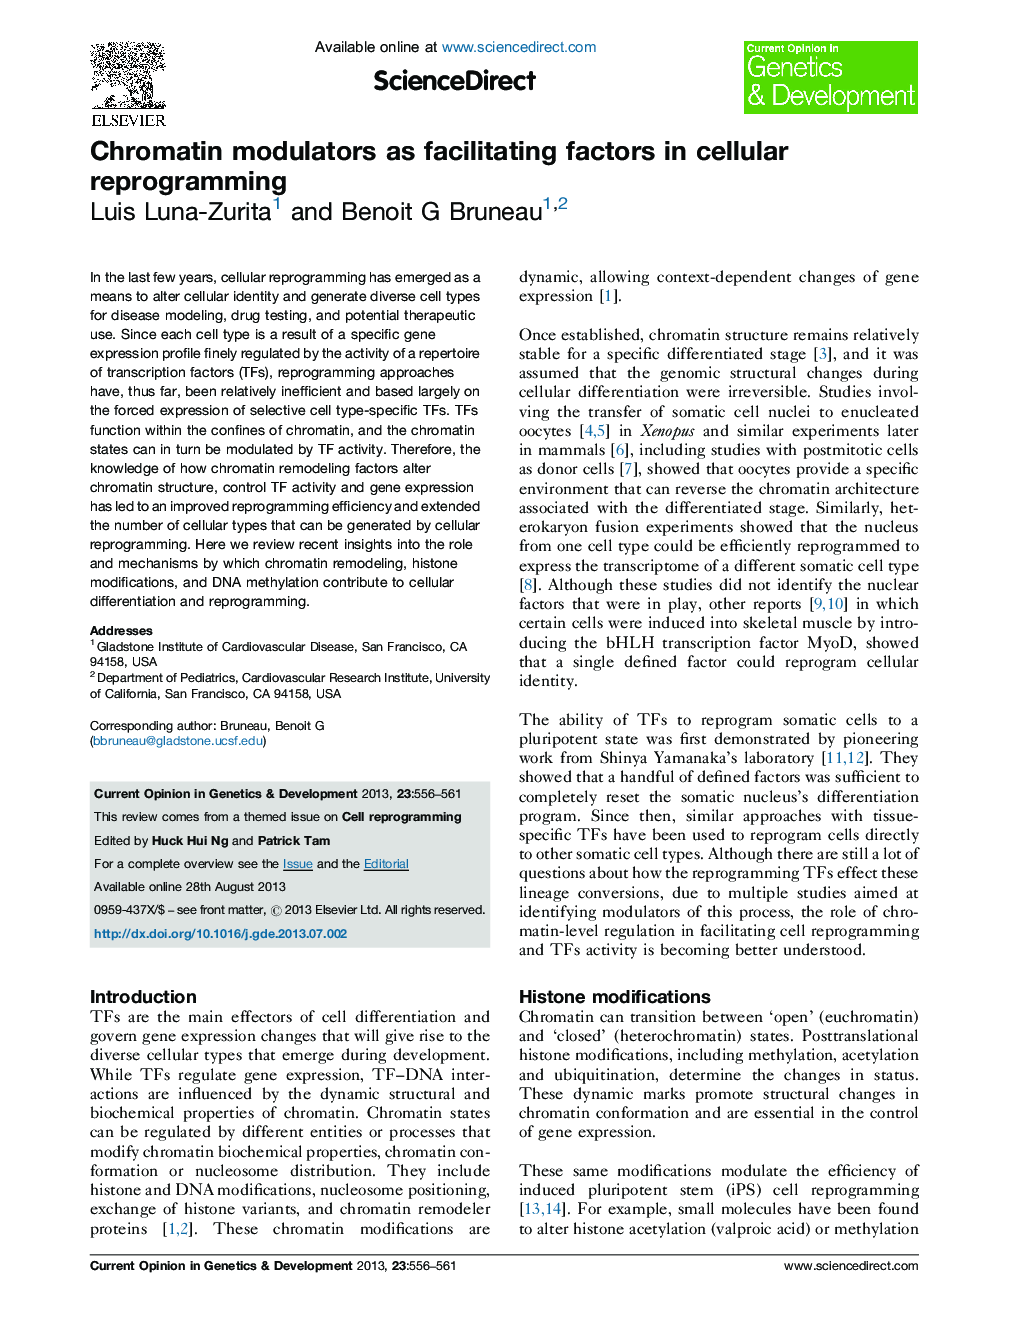 Chromatin modulators as facilitating factors in cellular reprogramming